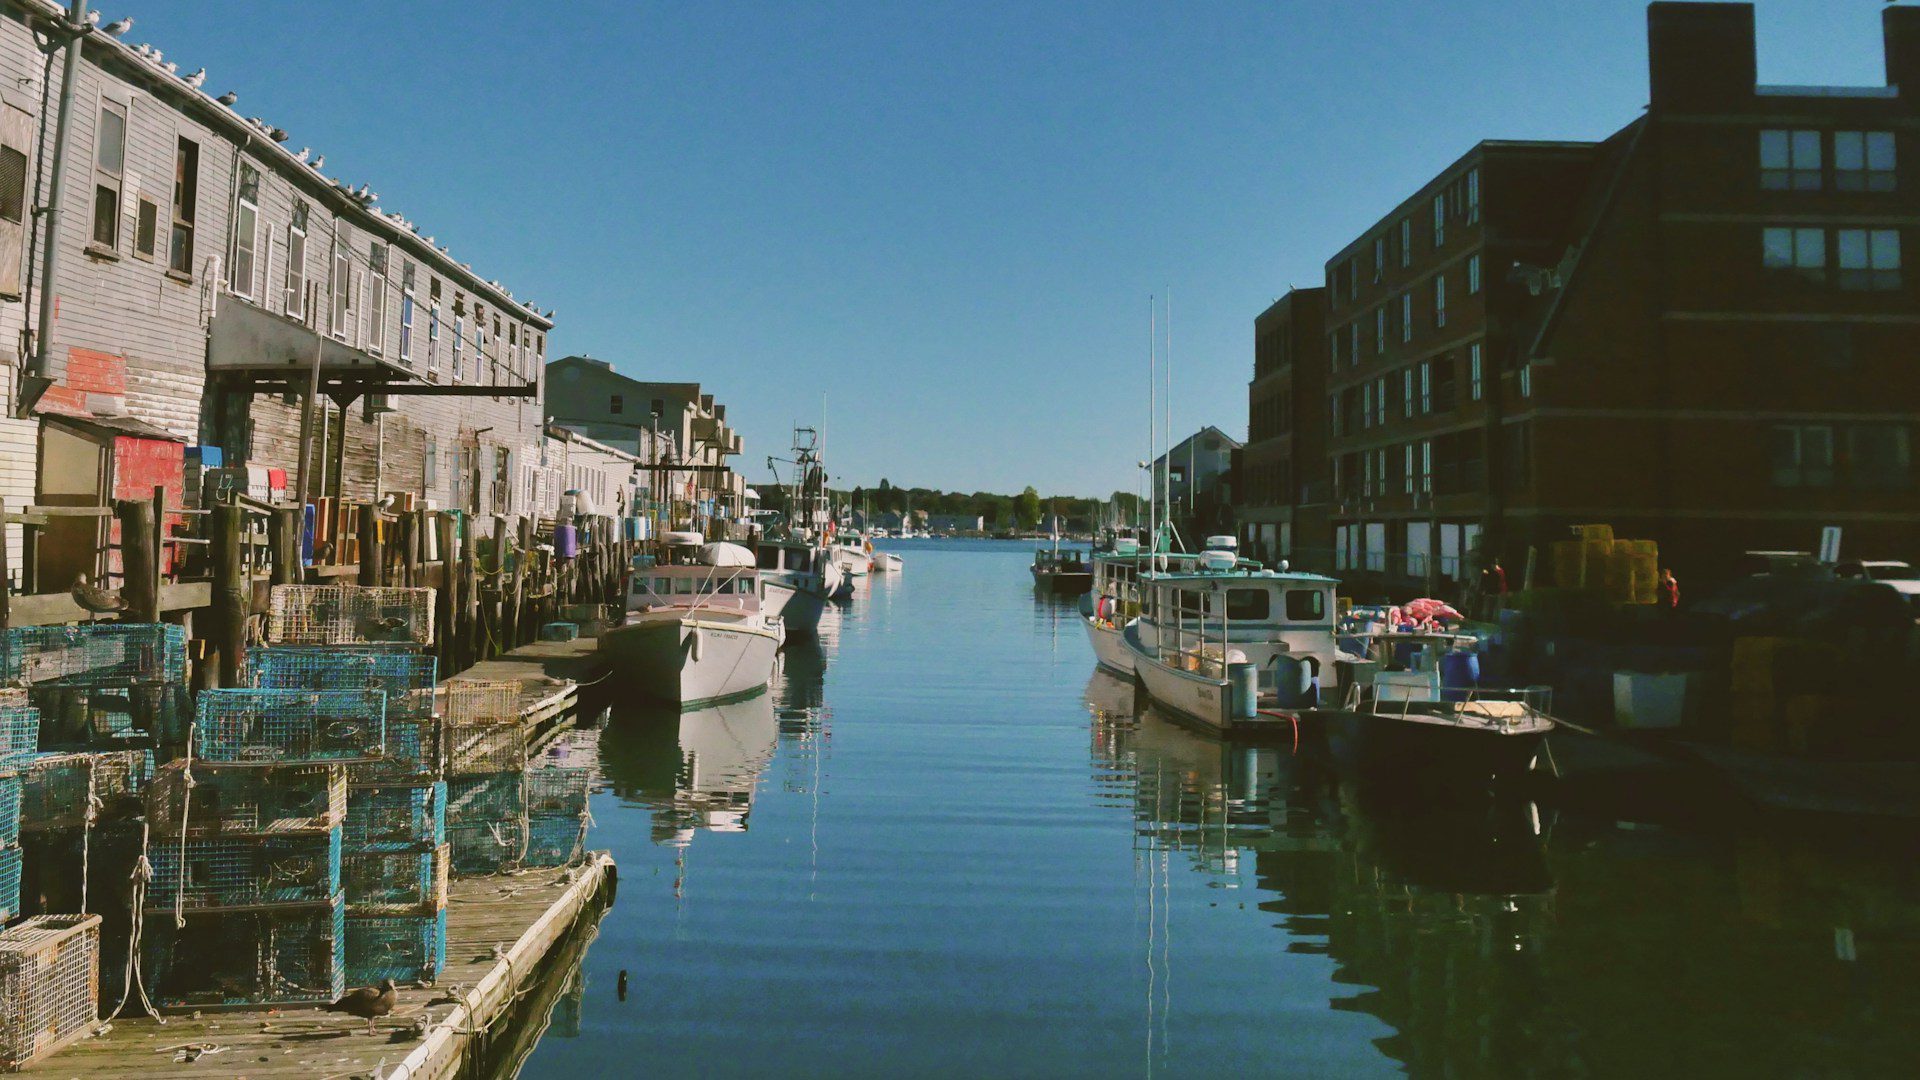 Dockside in Maine